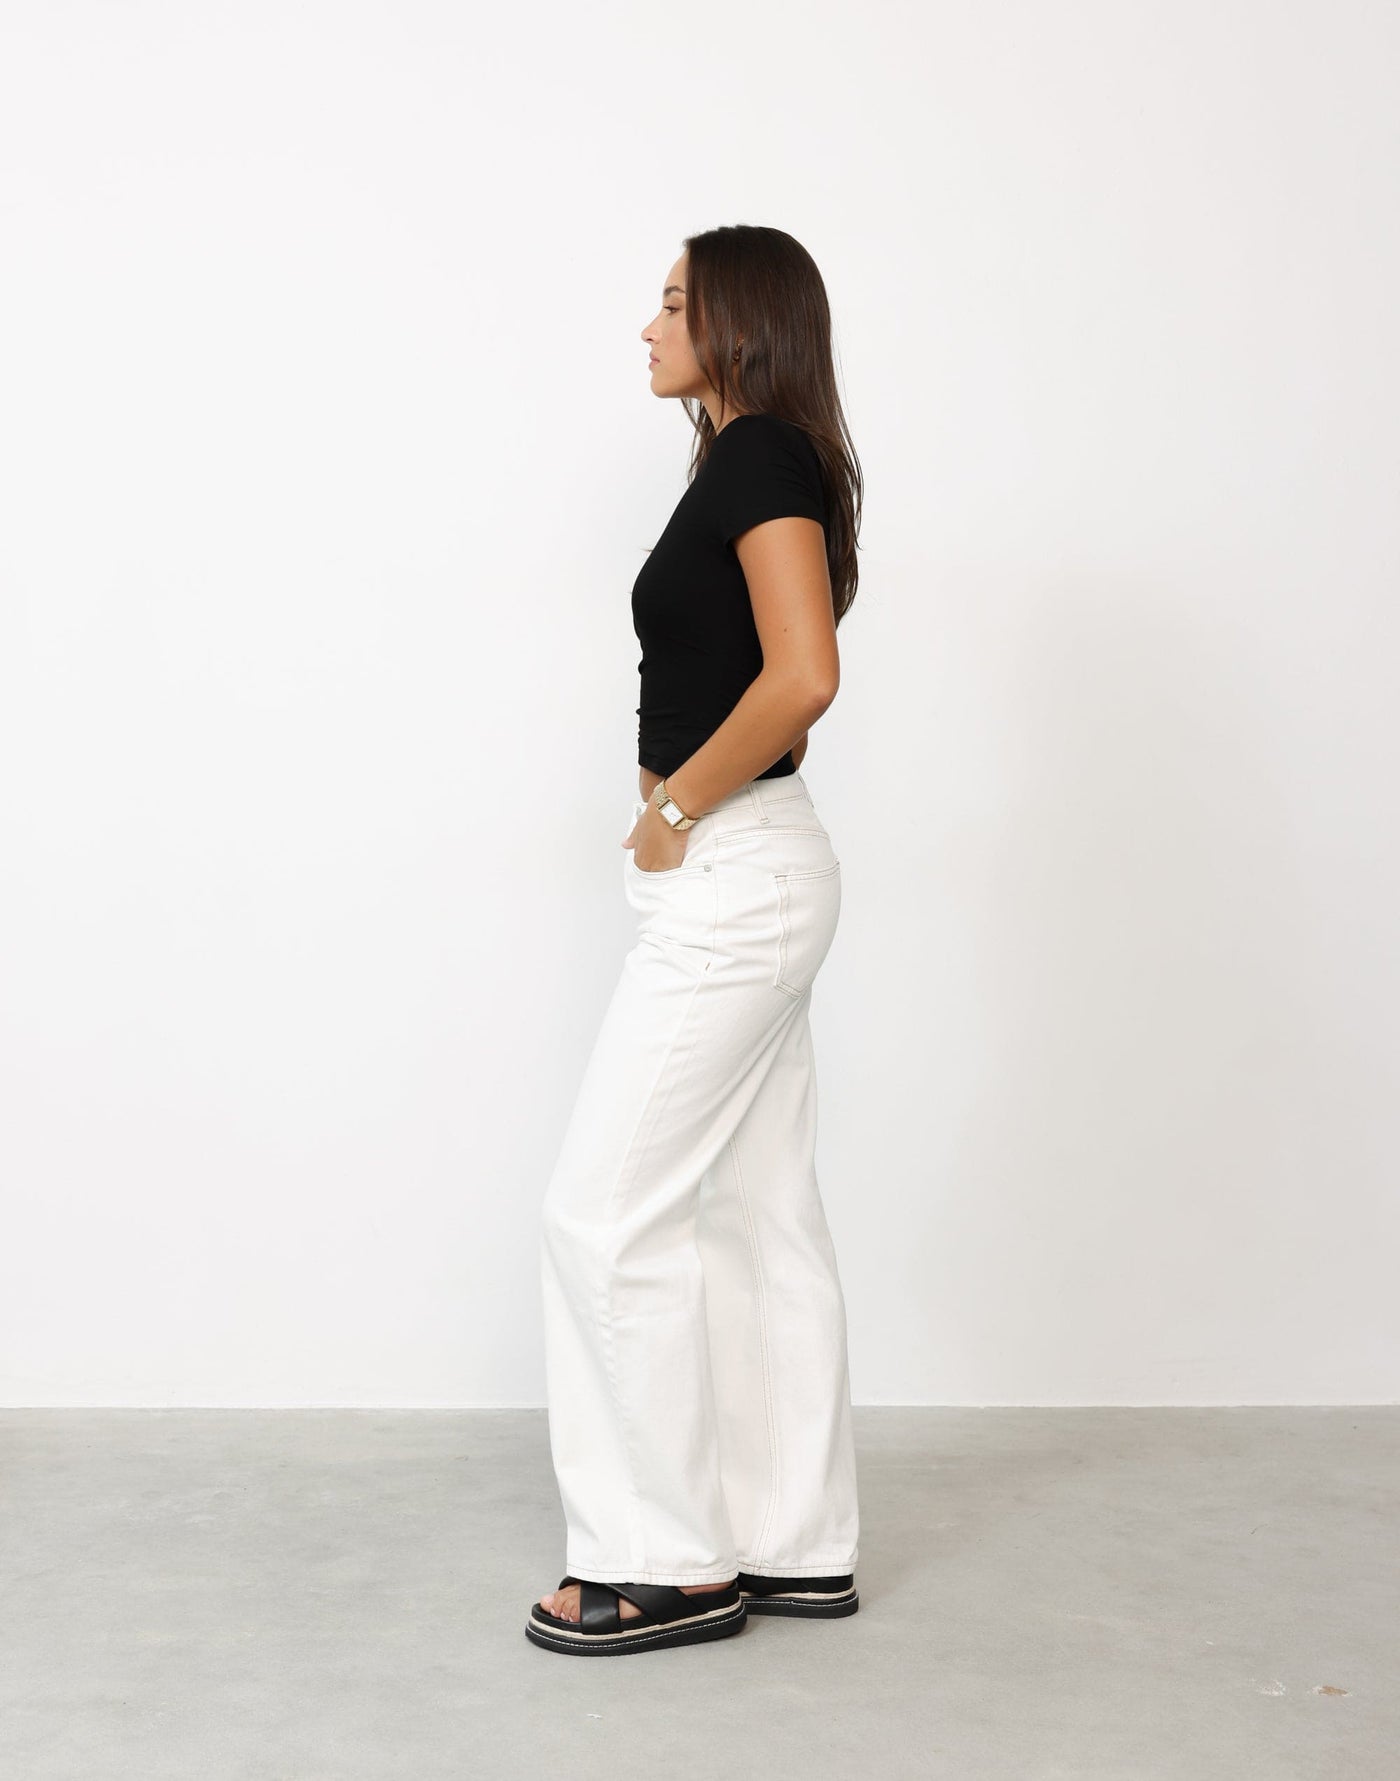 Leona Top (Black) - One Shoulder Neckline Bodycon Top - Women's Top - Charcoal Clothing